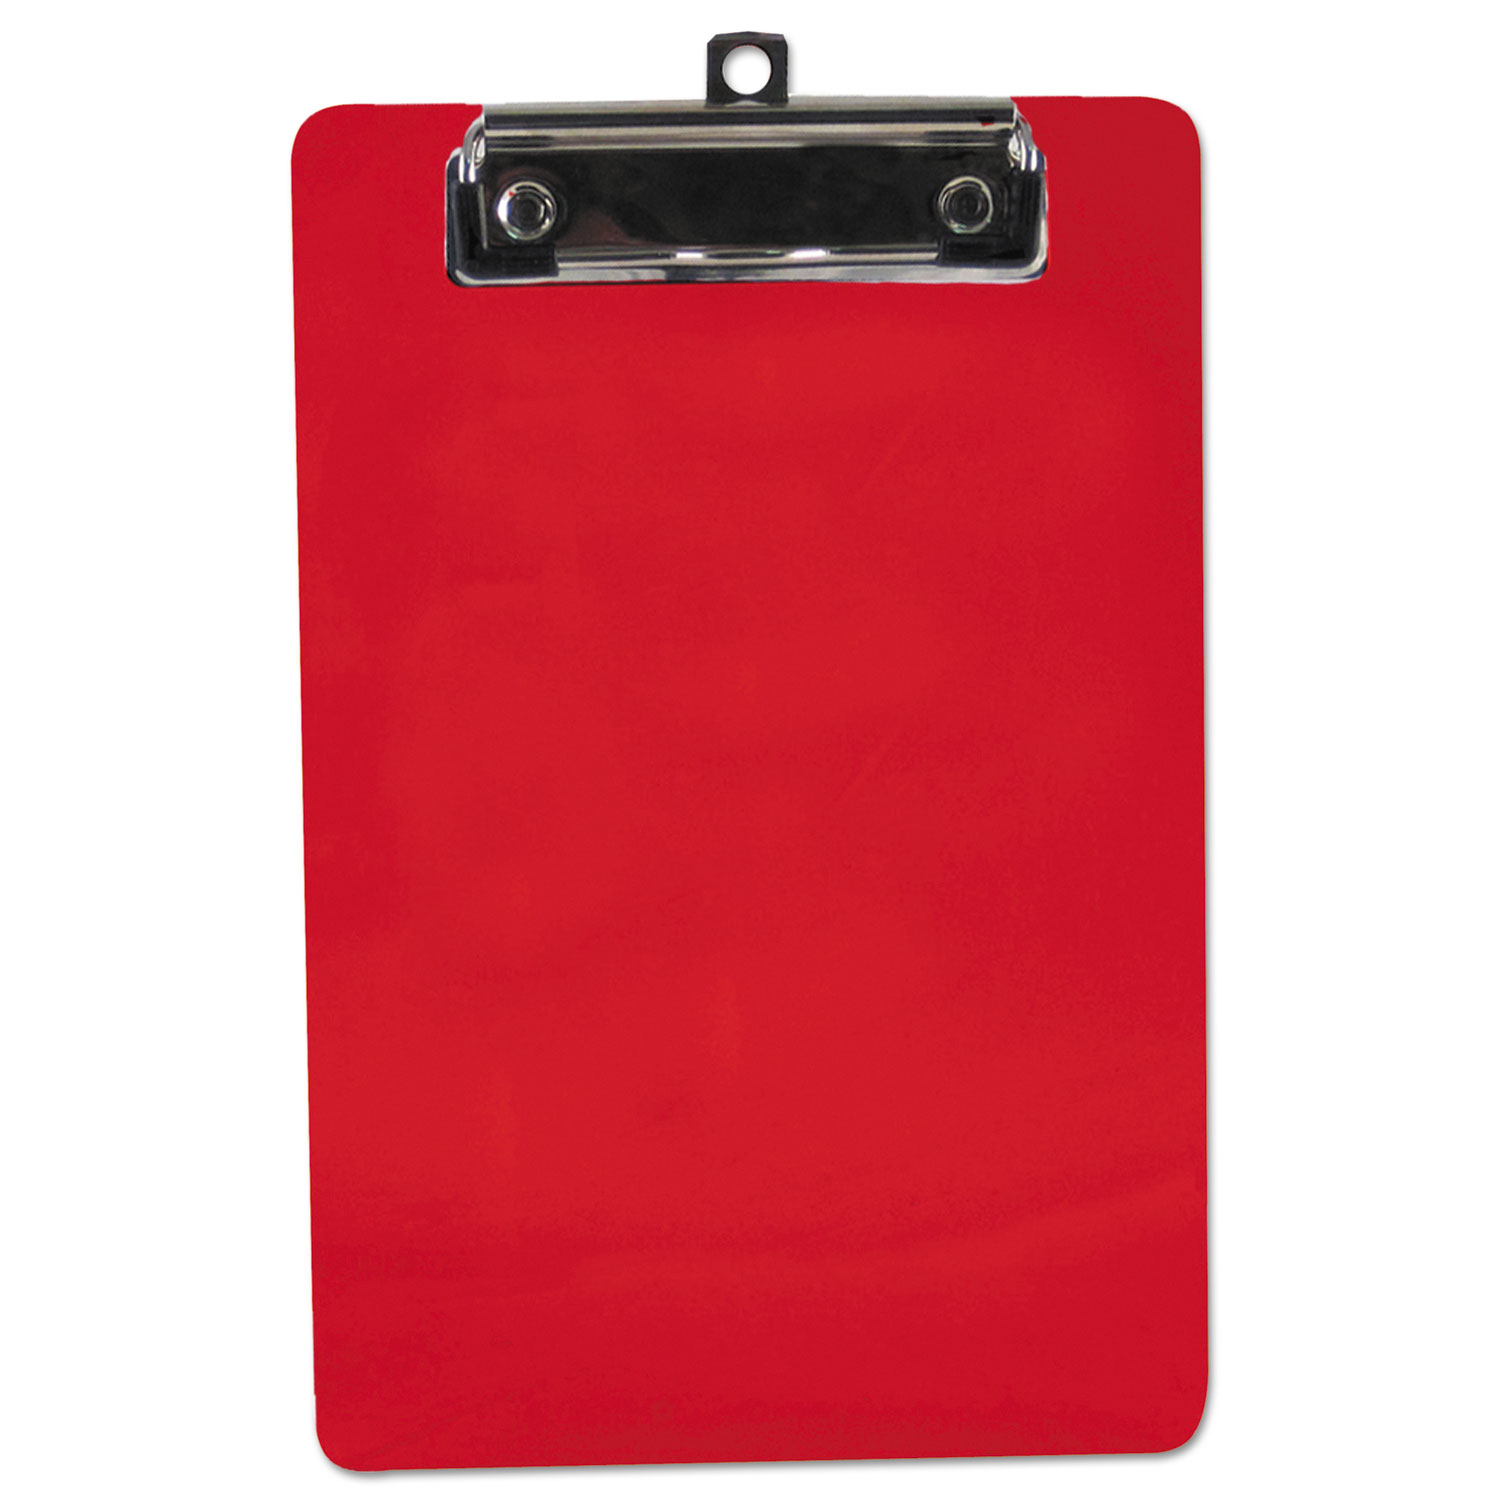  Saunders 00518 Plastic Clipboard, 1/2 Capacity, 6 x 9 Sheets, Red (SAU00518) 